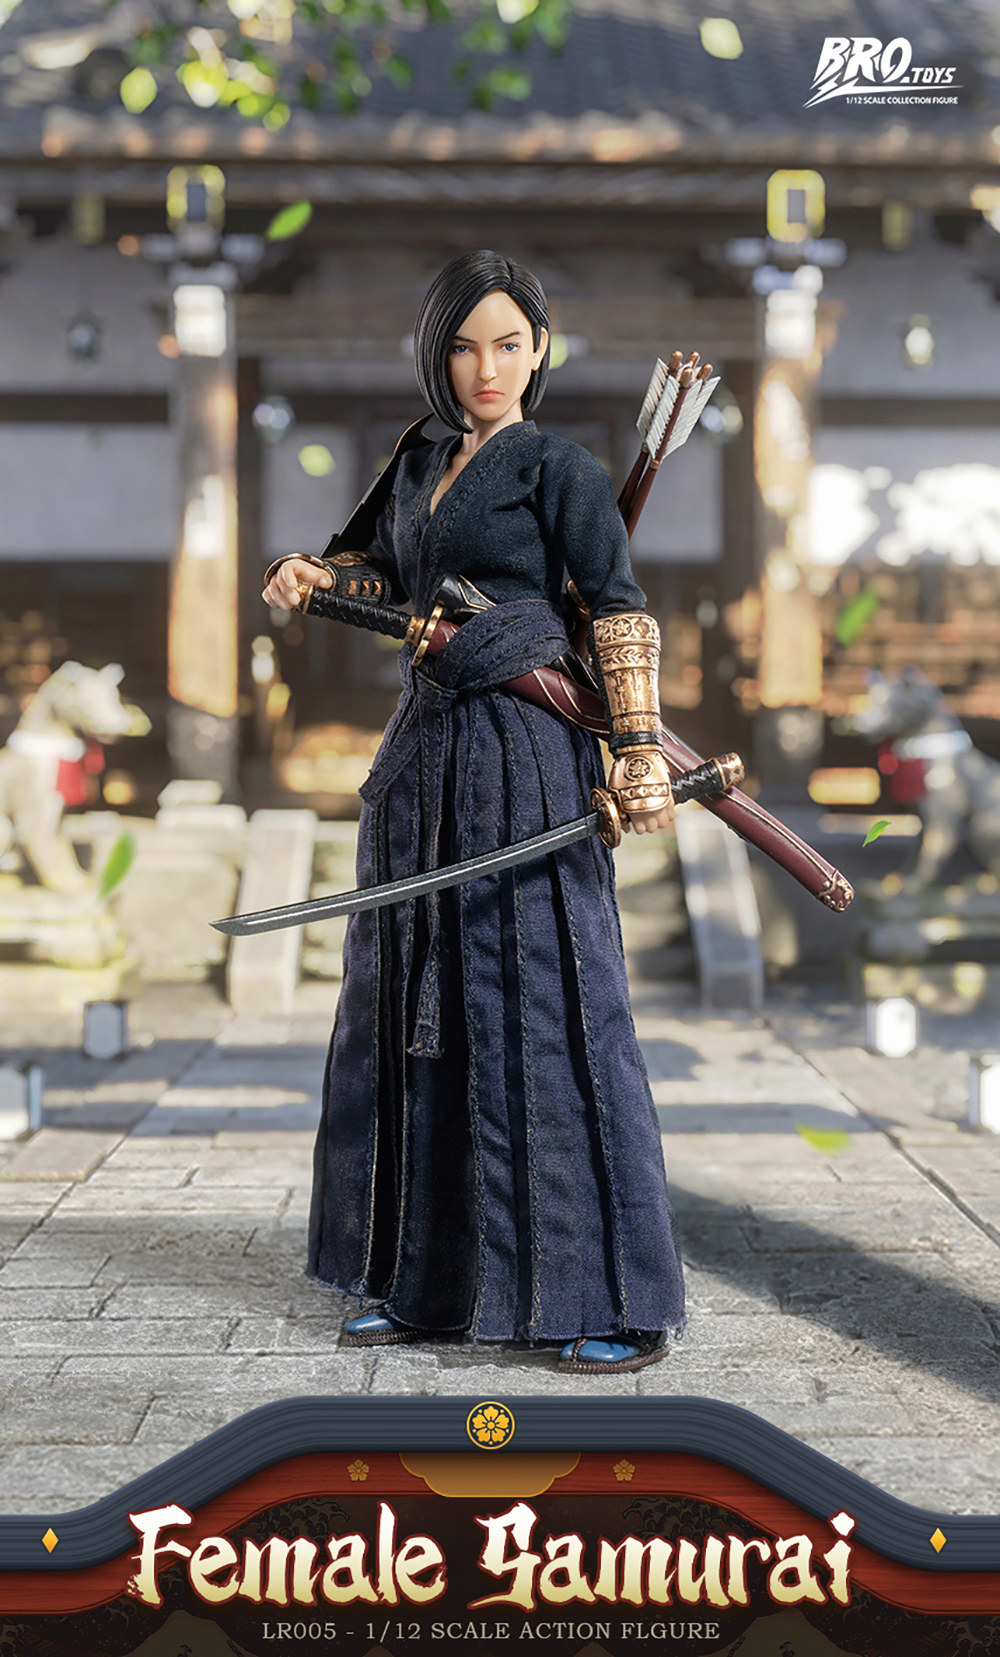 NEW PRODUCT: Brotoys LR005 1/12 Scale Female Samurai 11117